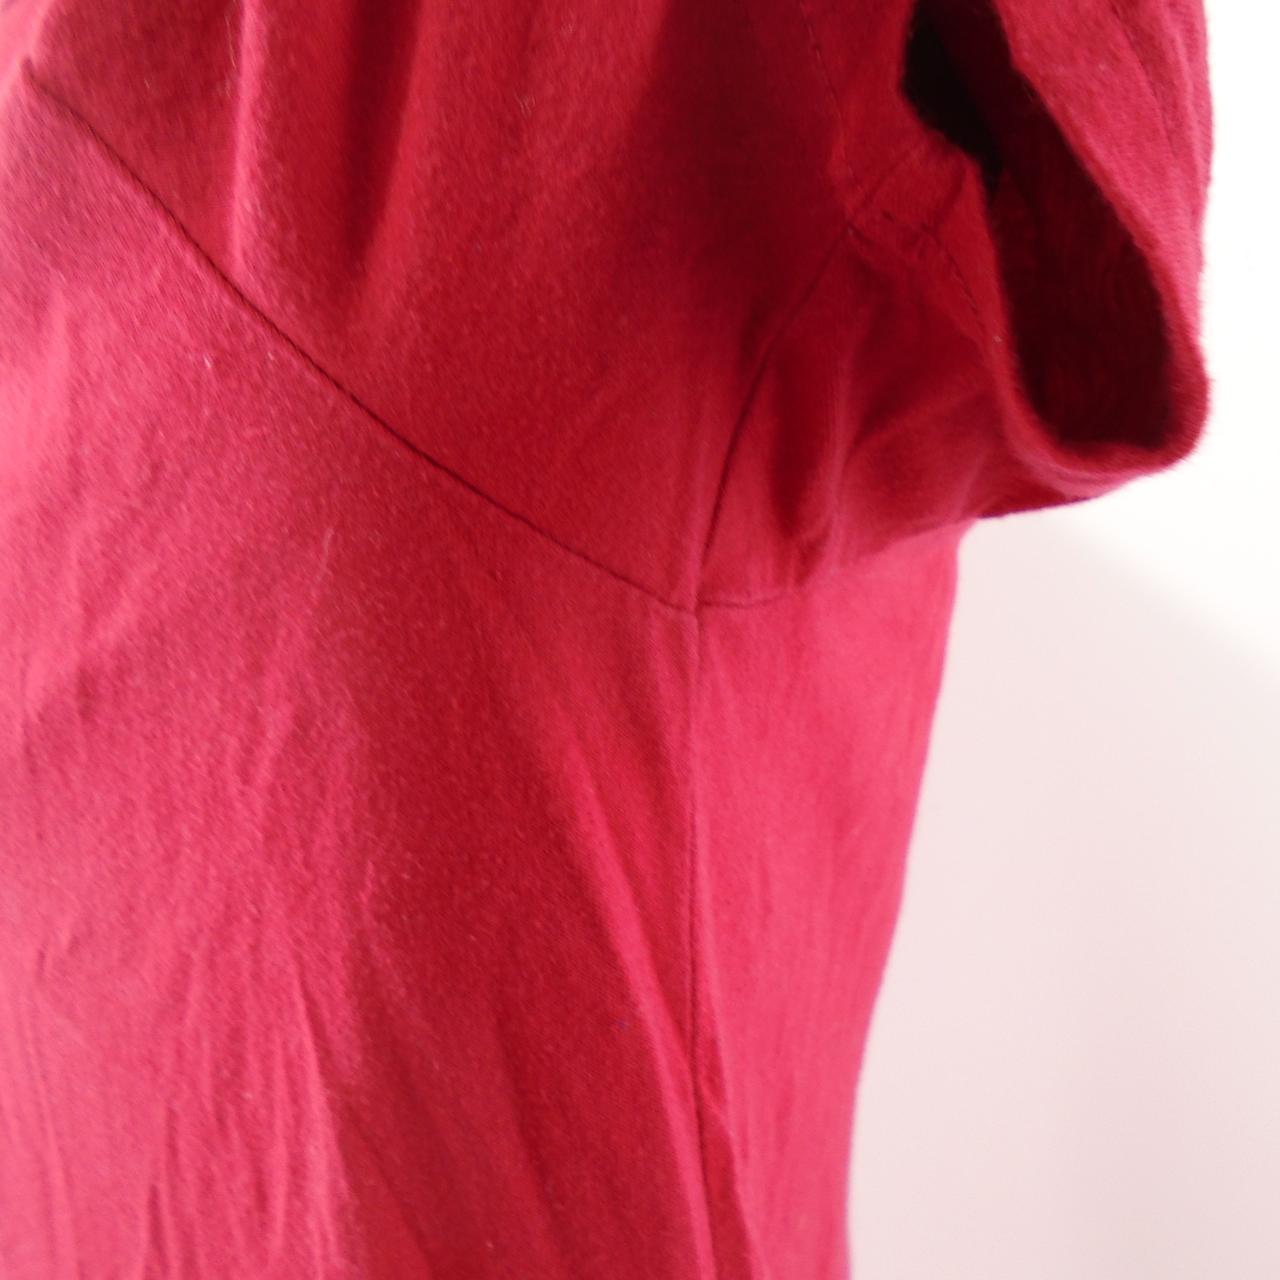 Camiseta Hombre Hollister. Rojo. L. Usado. Bien